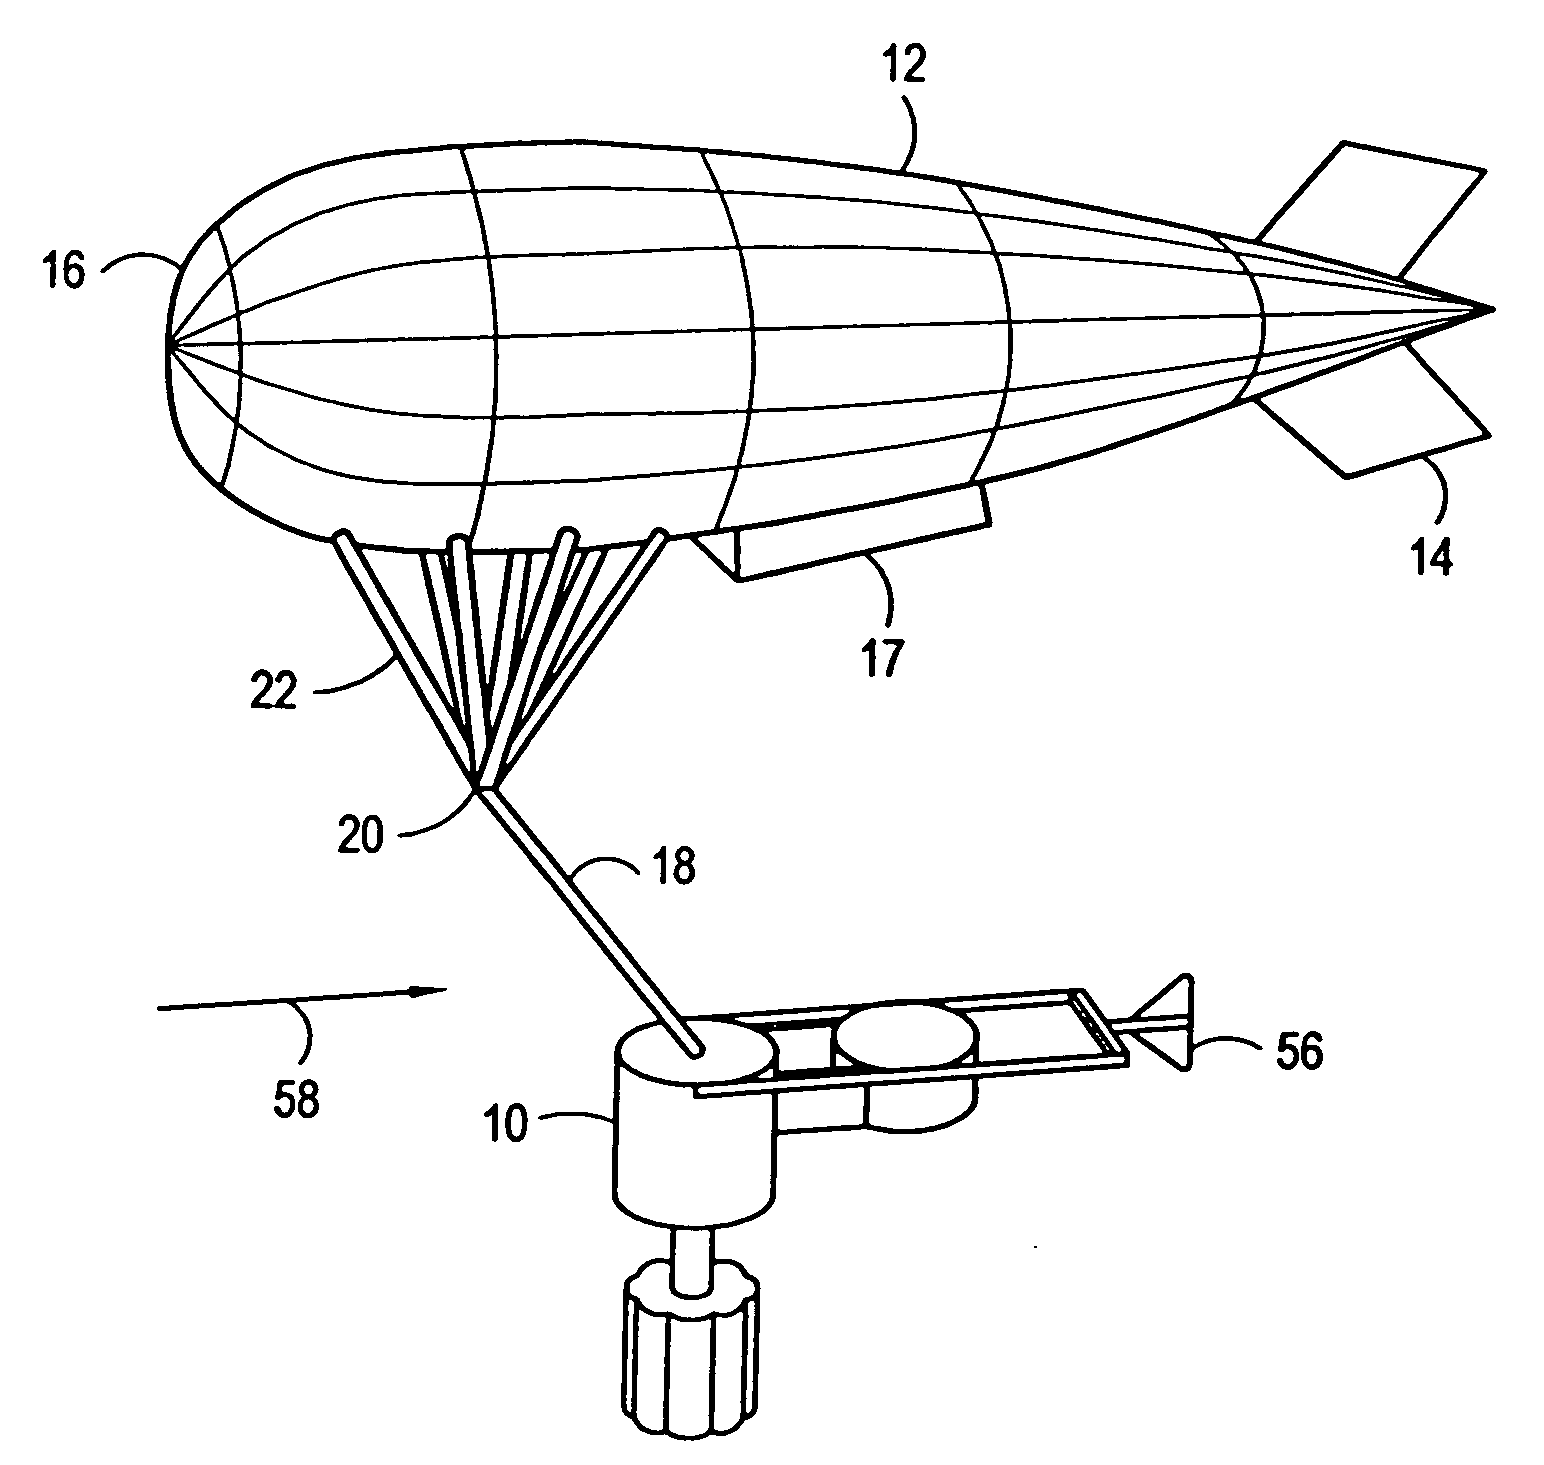 Aerostat deployment apparatus